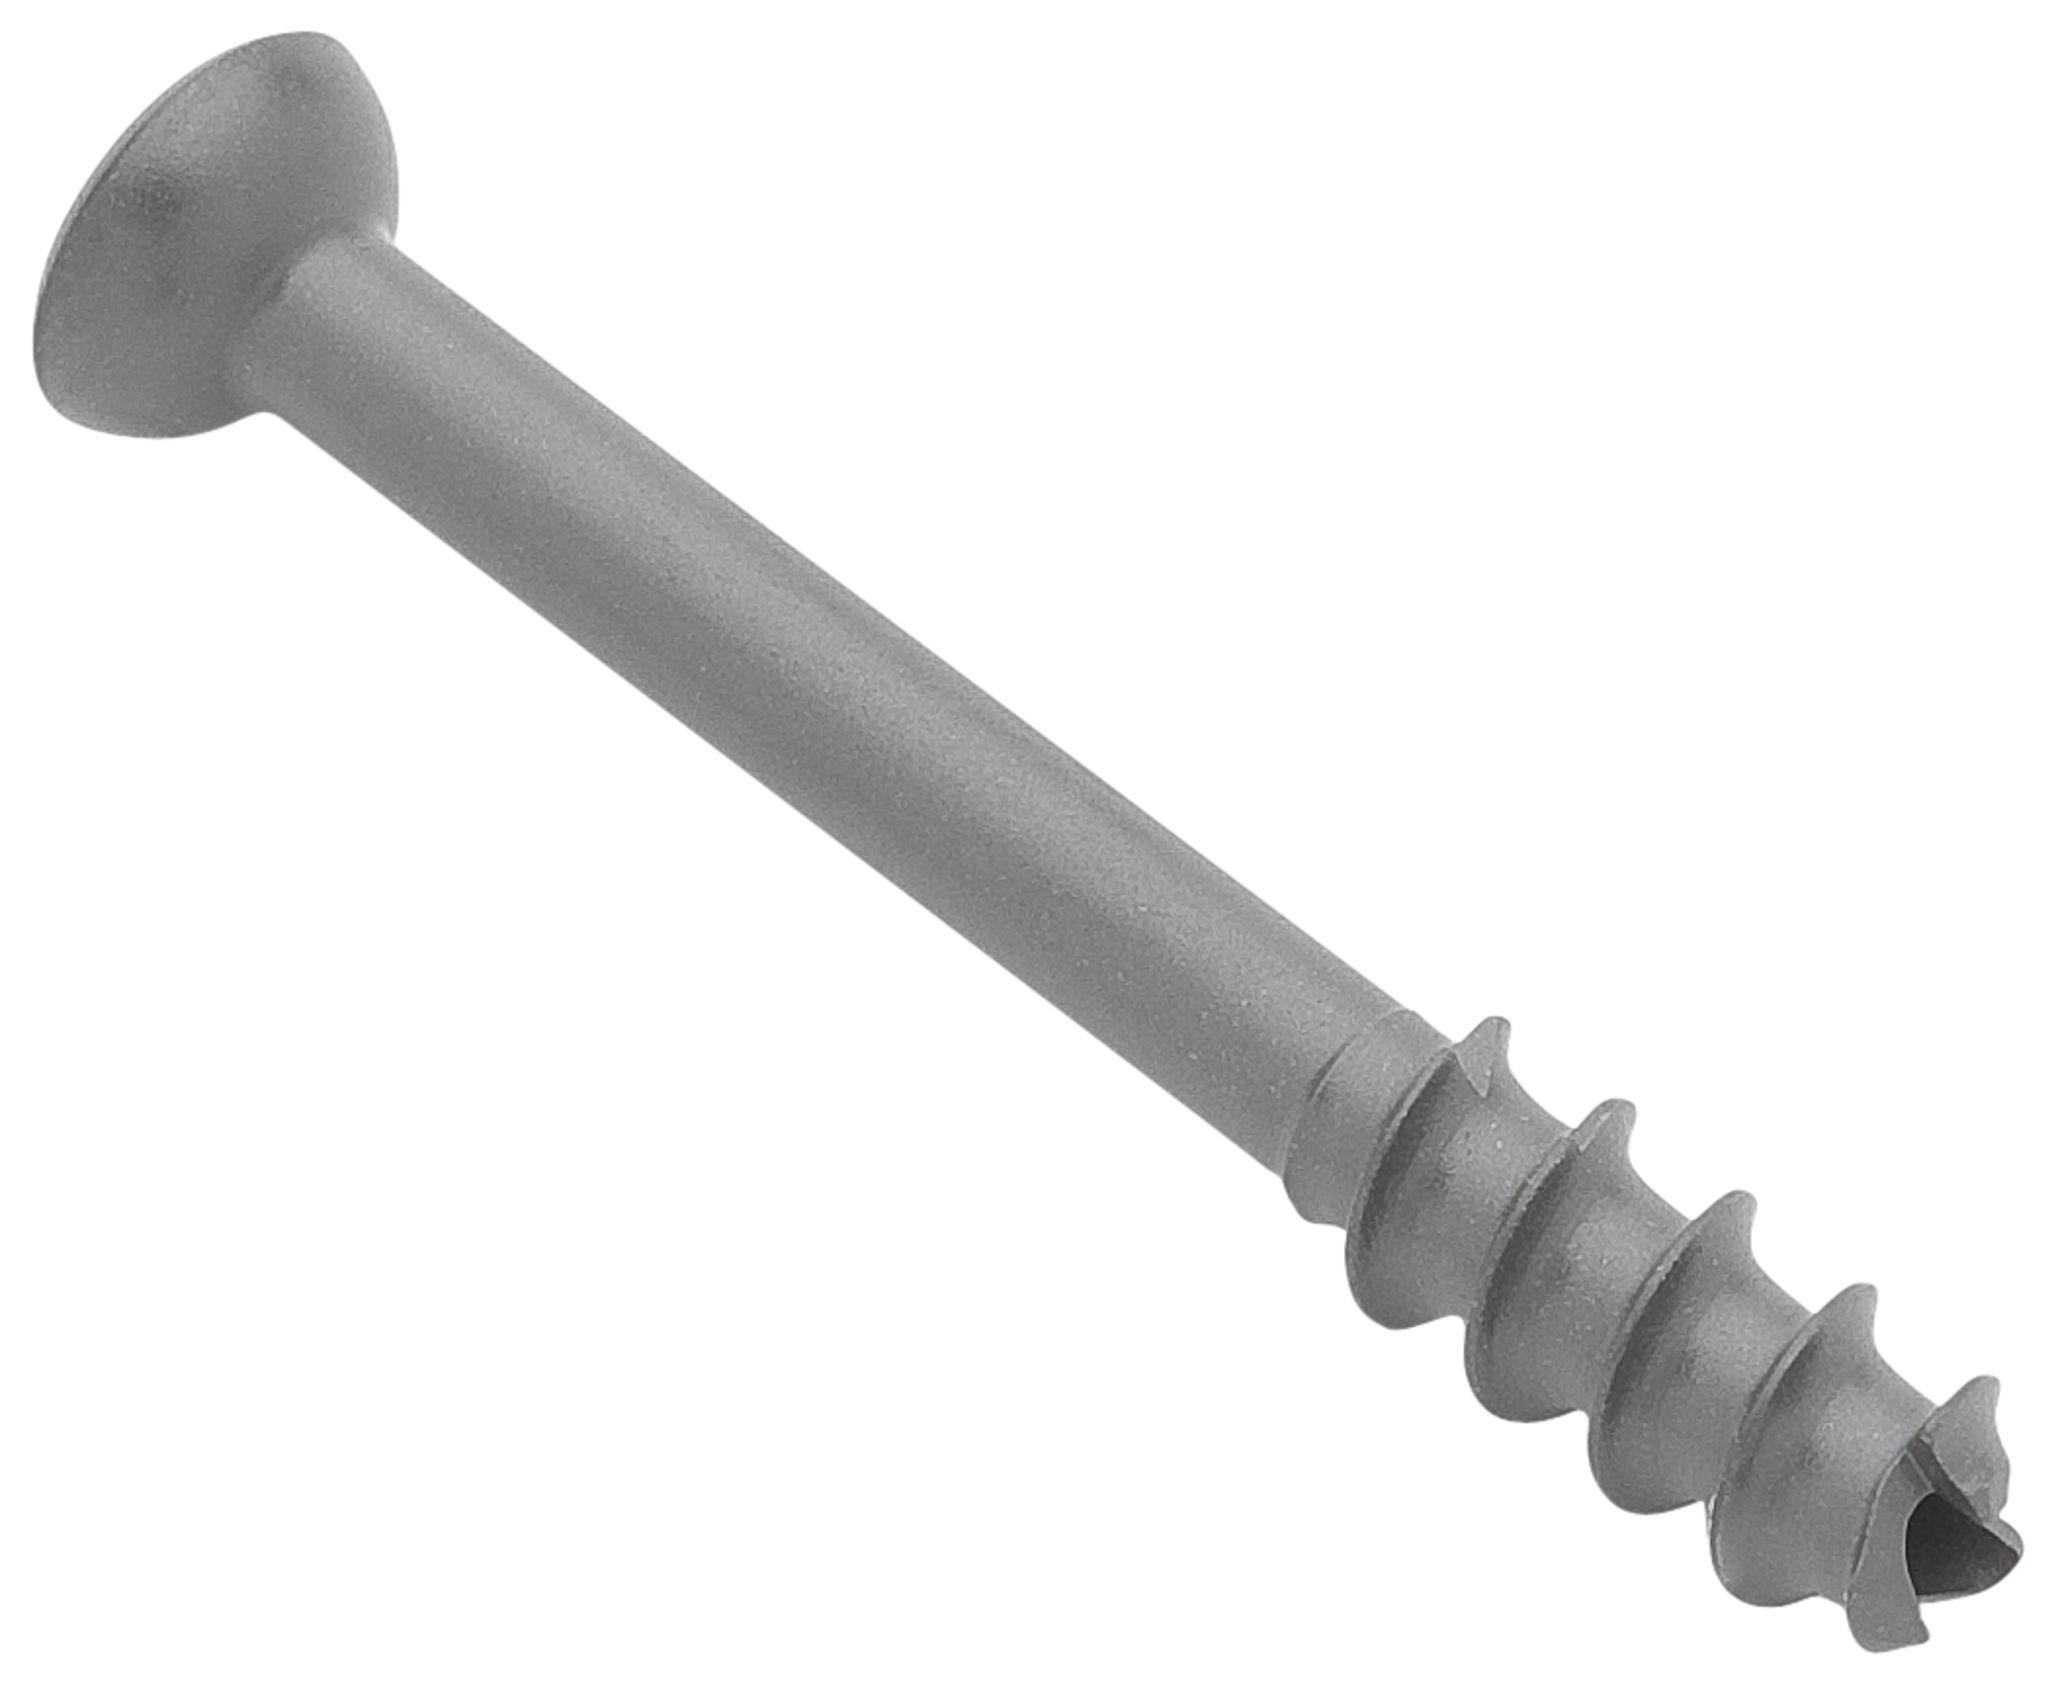 Osteotome Blade Shield - AR-7000-02 - Arthrex